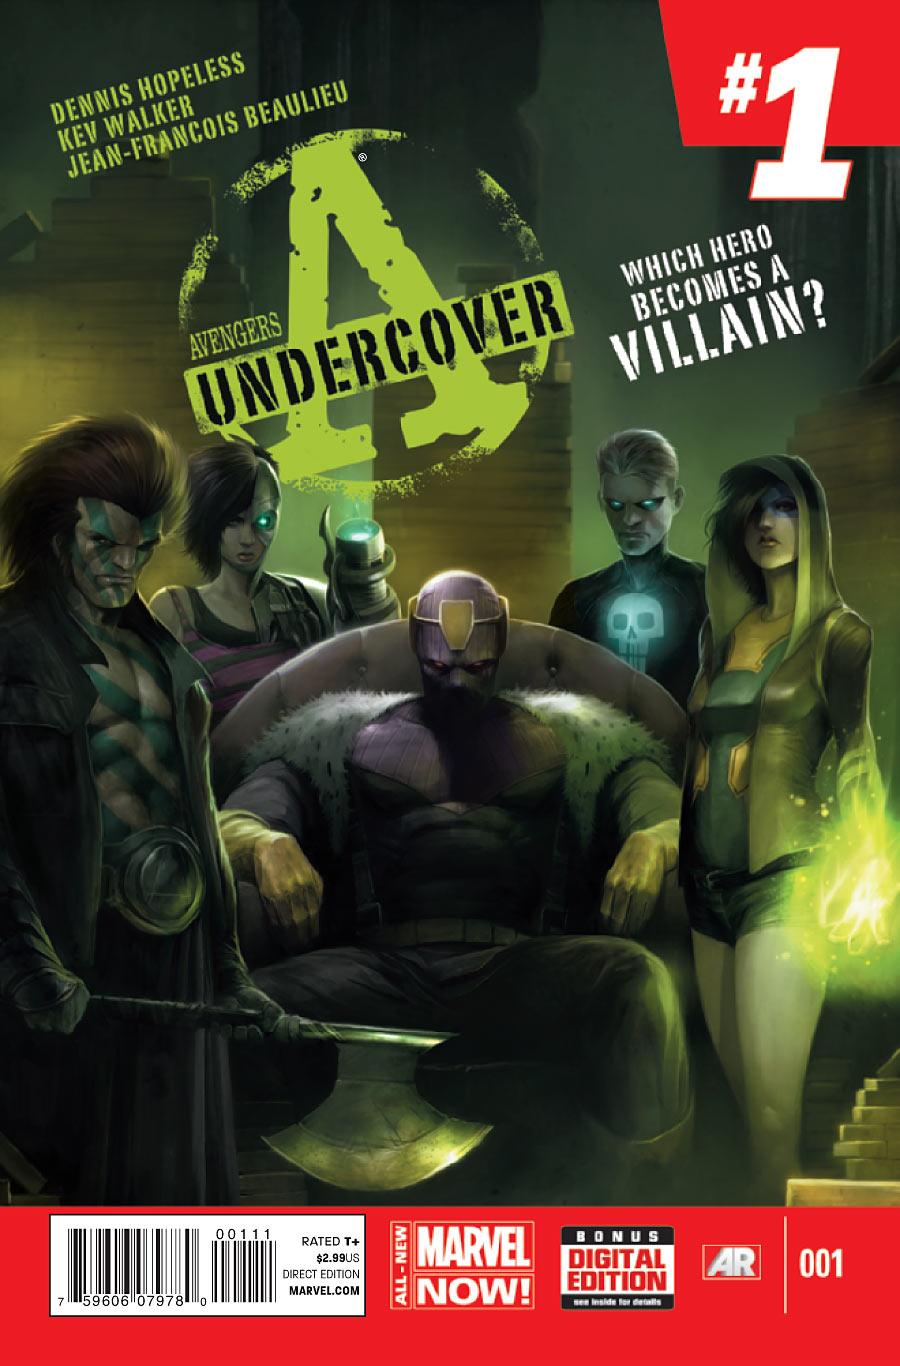 Avengers Undercover Vol. 1 #1